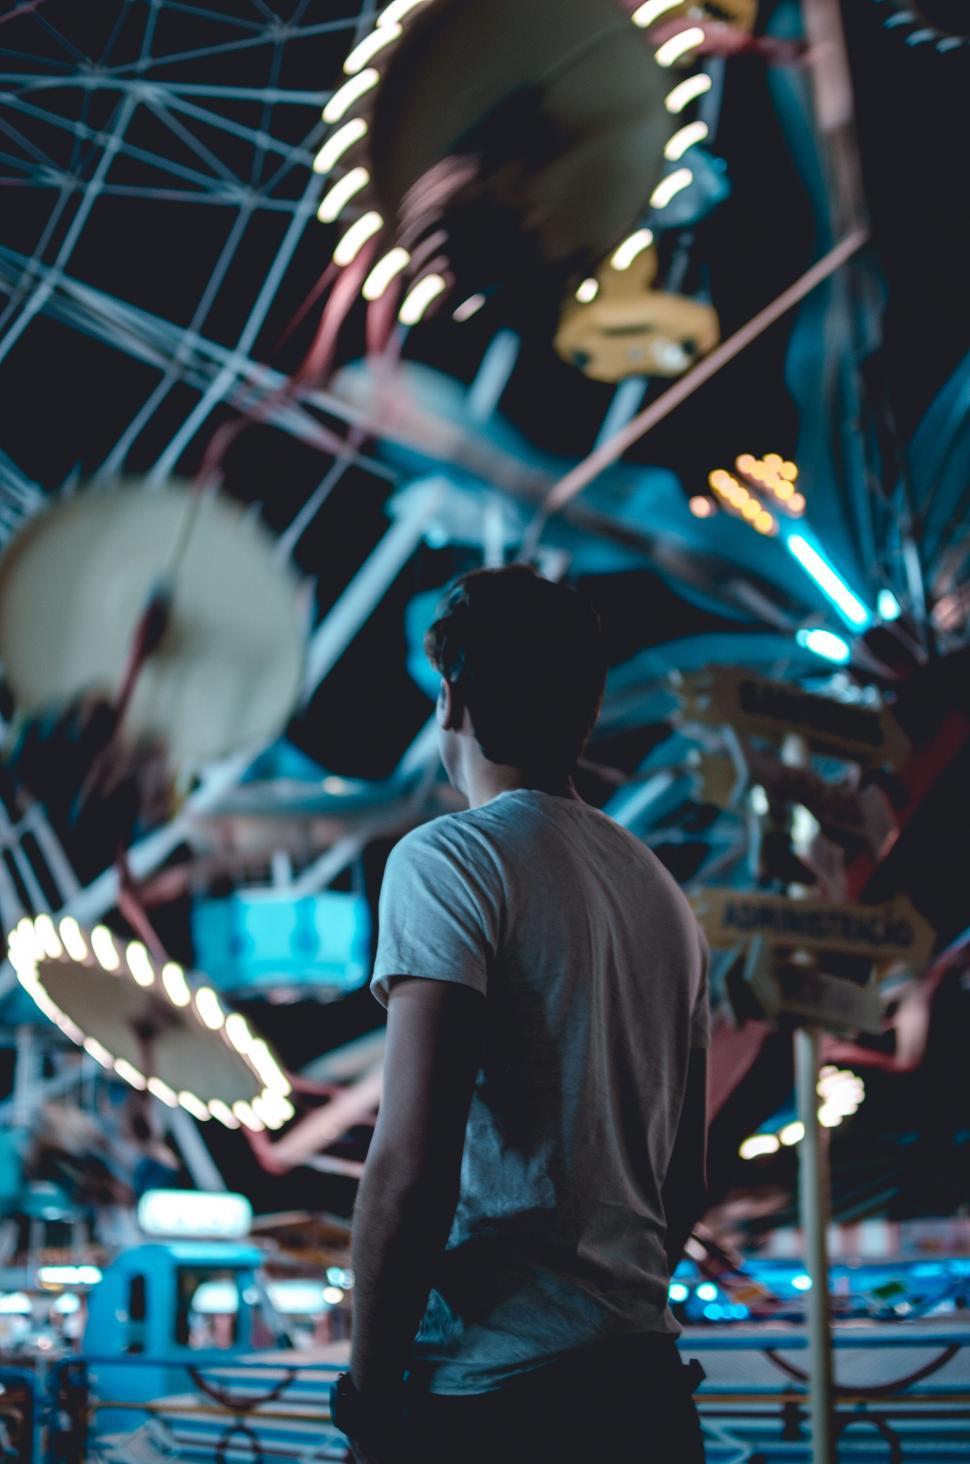 Free Image of Man gazing at amusement park rides at night 